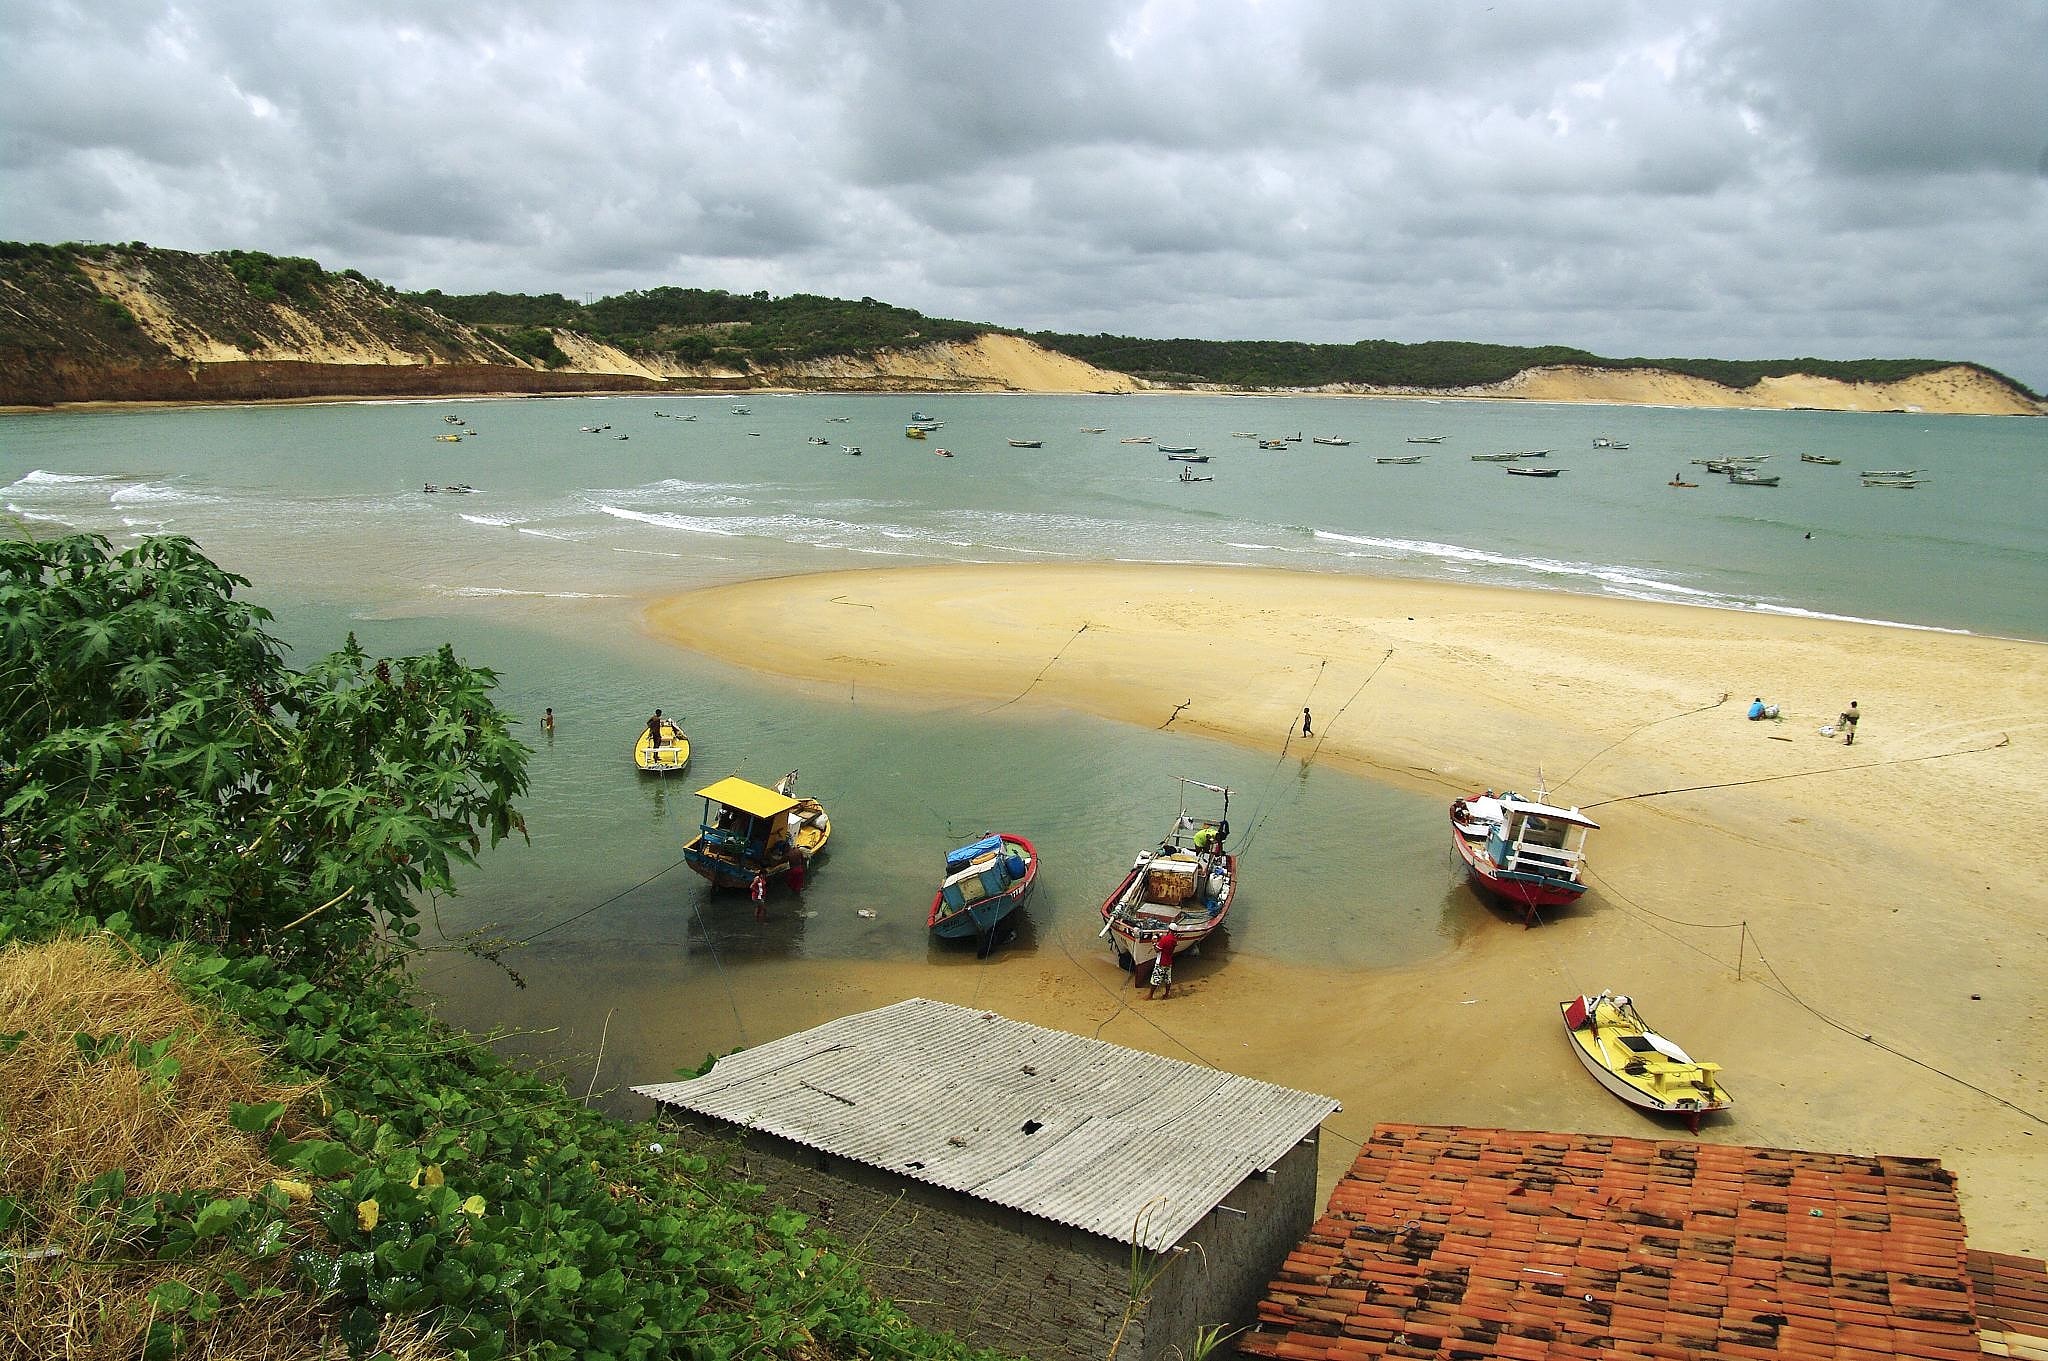 Baía Formosa, Brazil